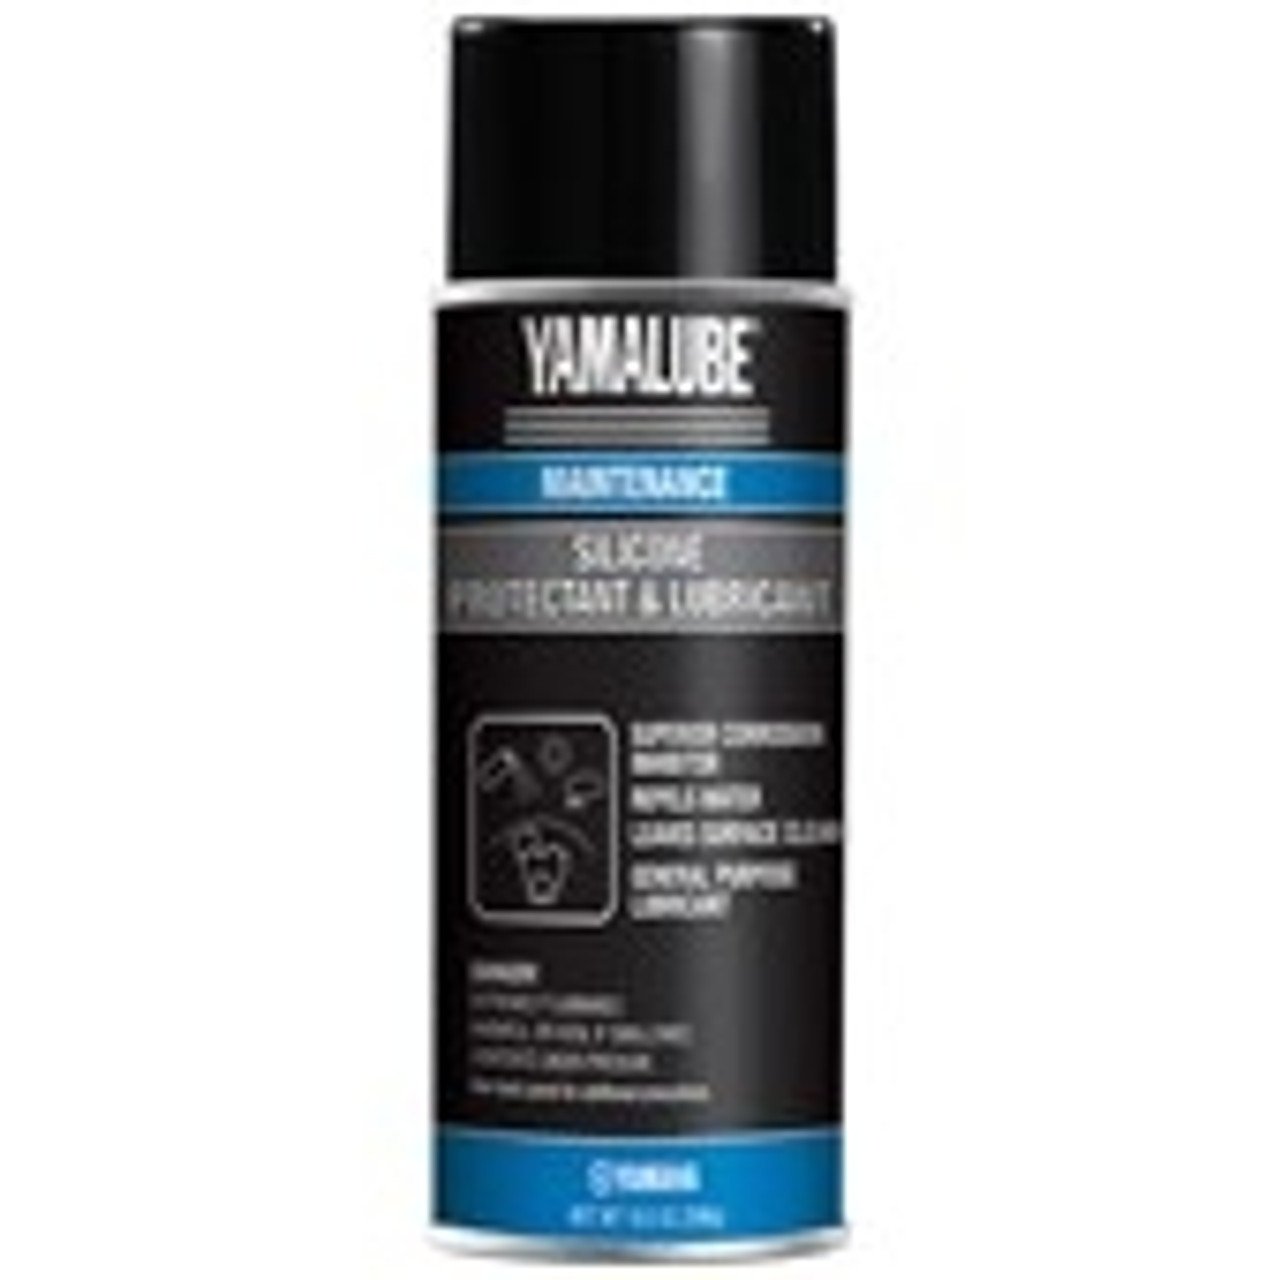 Yamaha ACC-SLCNS-PR-AY Yamalube Silicone Spray Protectant & Lubricant